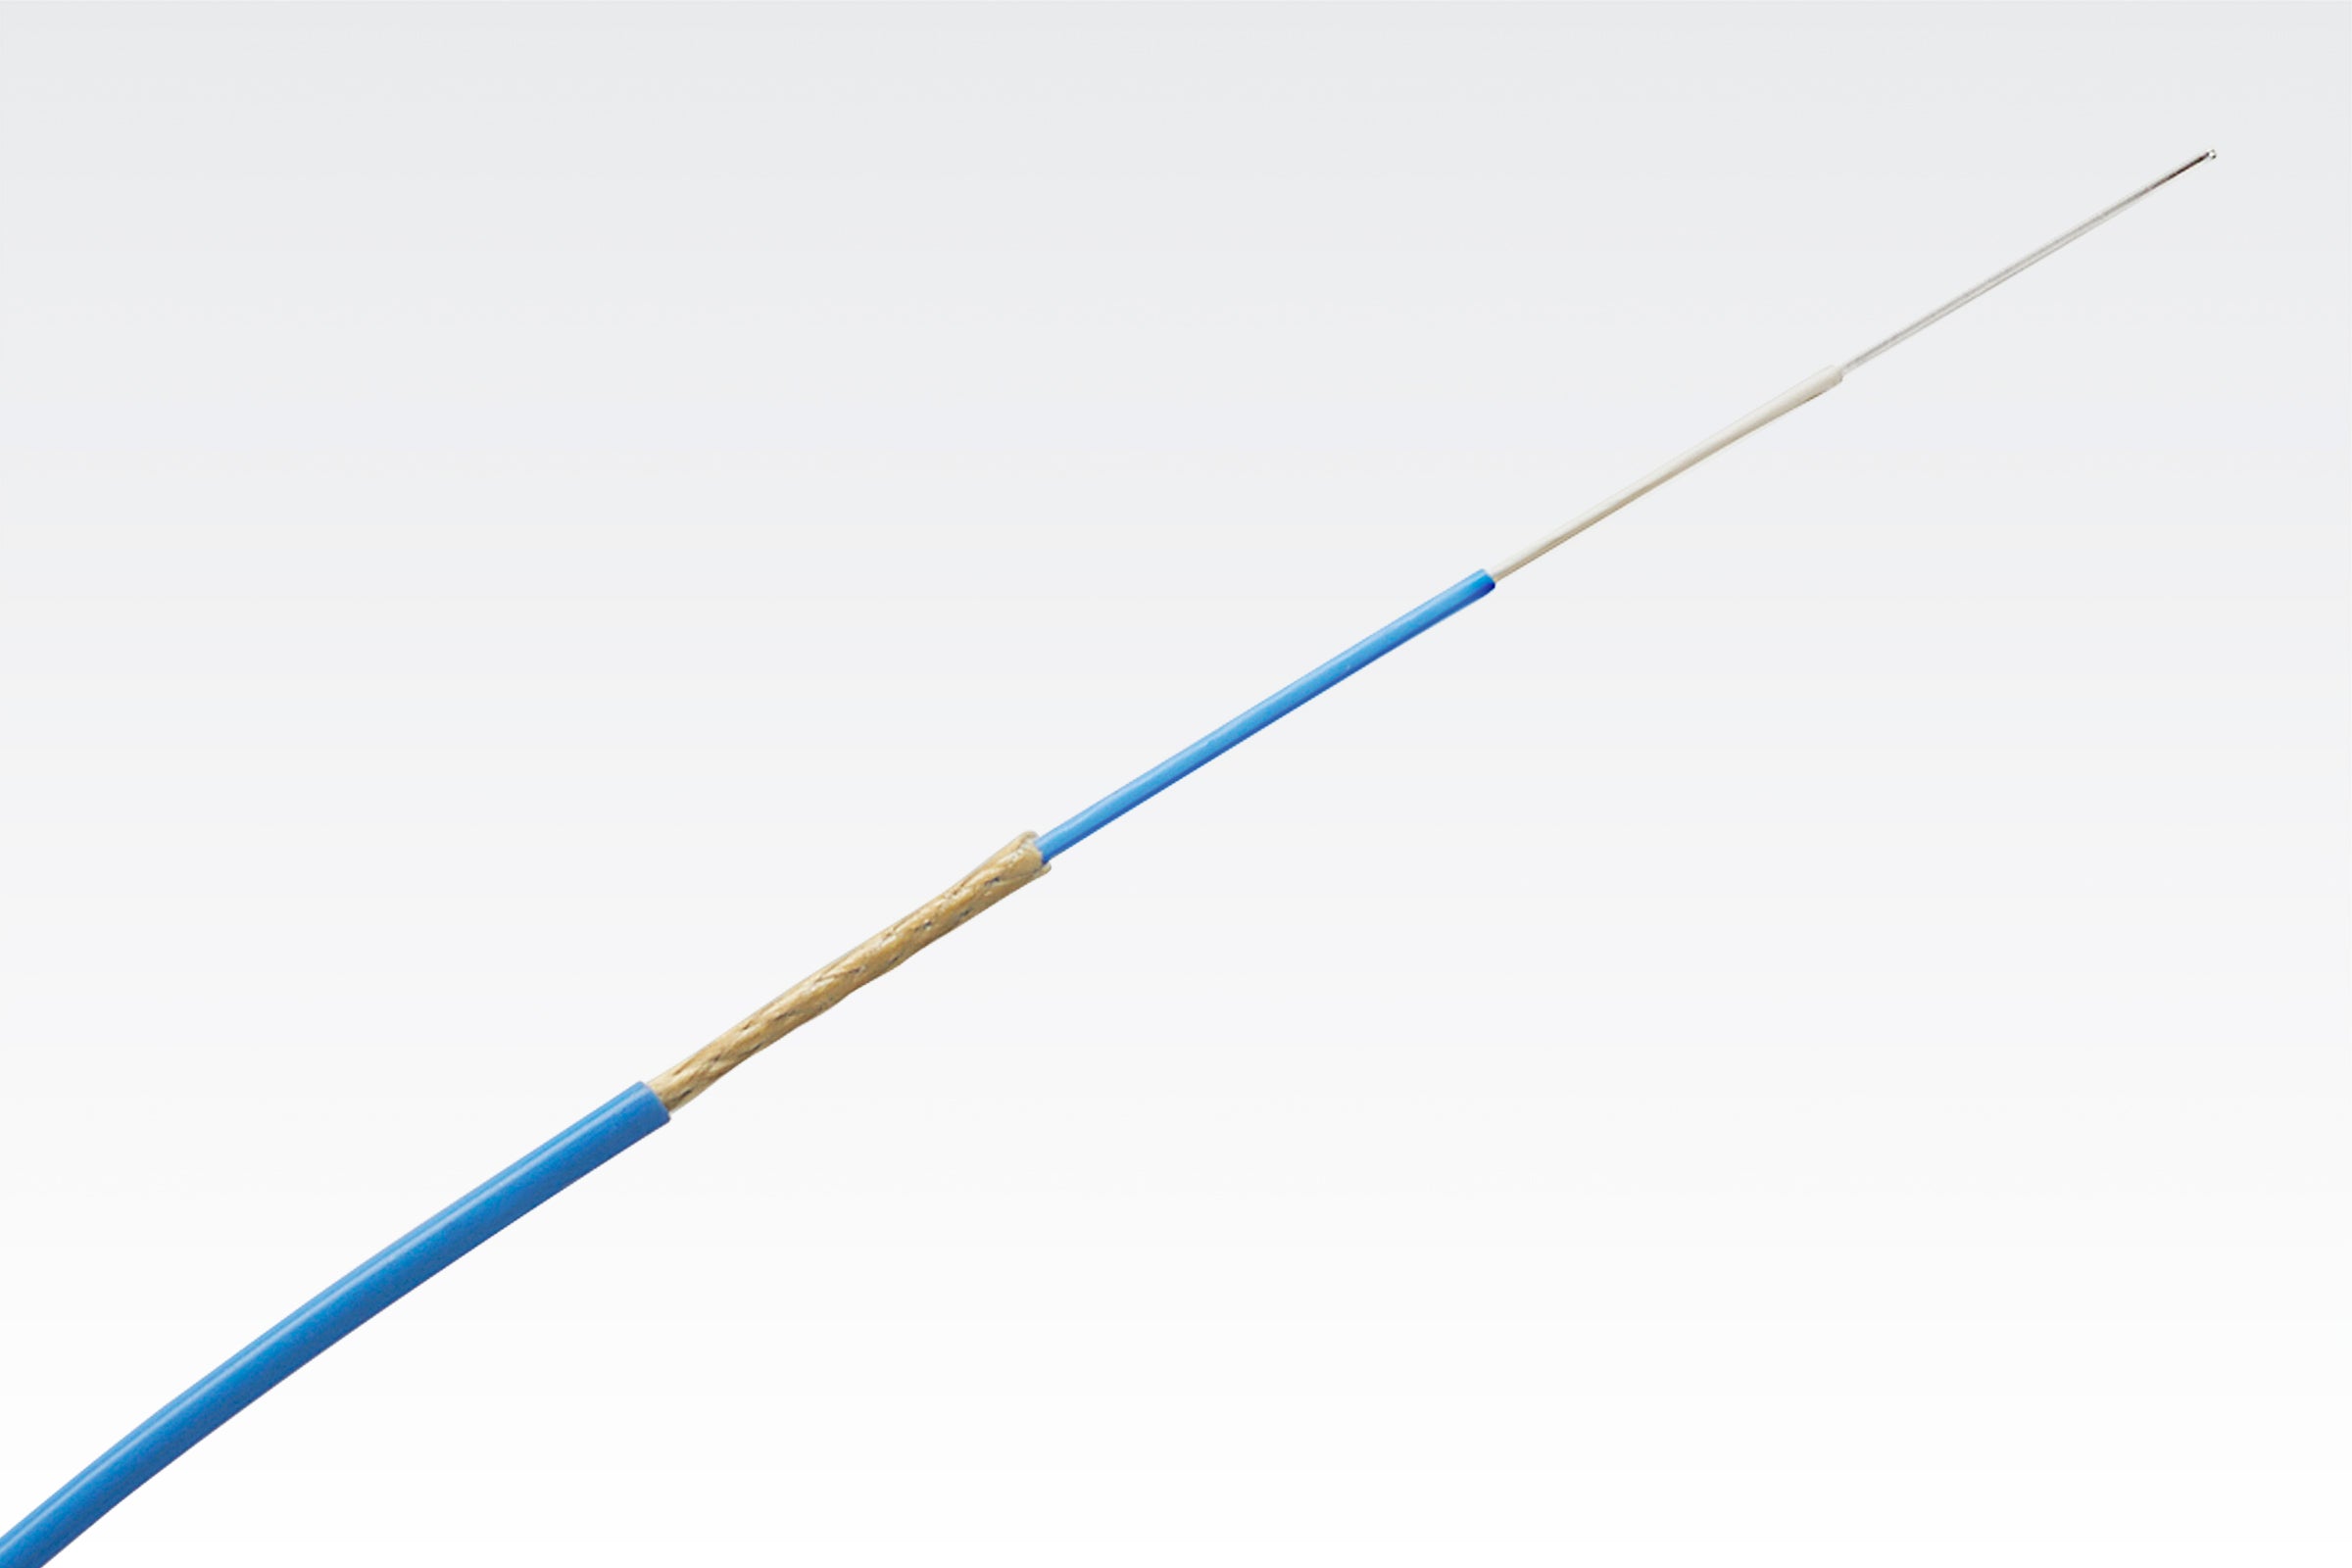 Gore's 1.2 mm Simplex chemical-resistant fiber optic cable